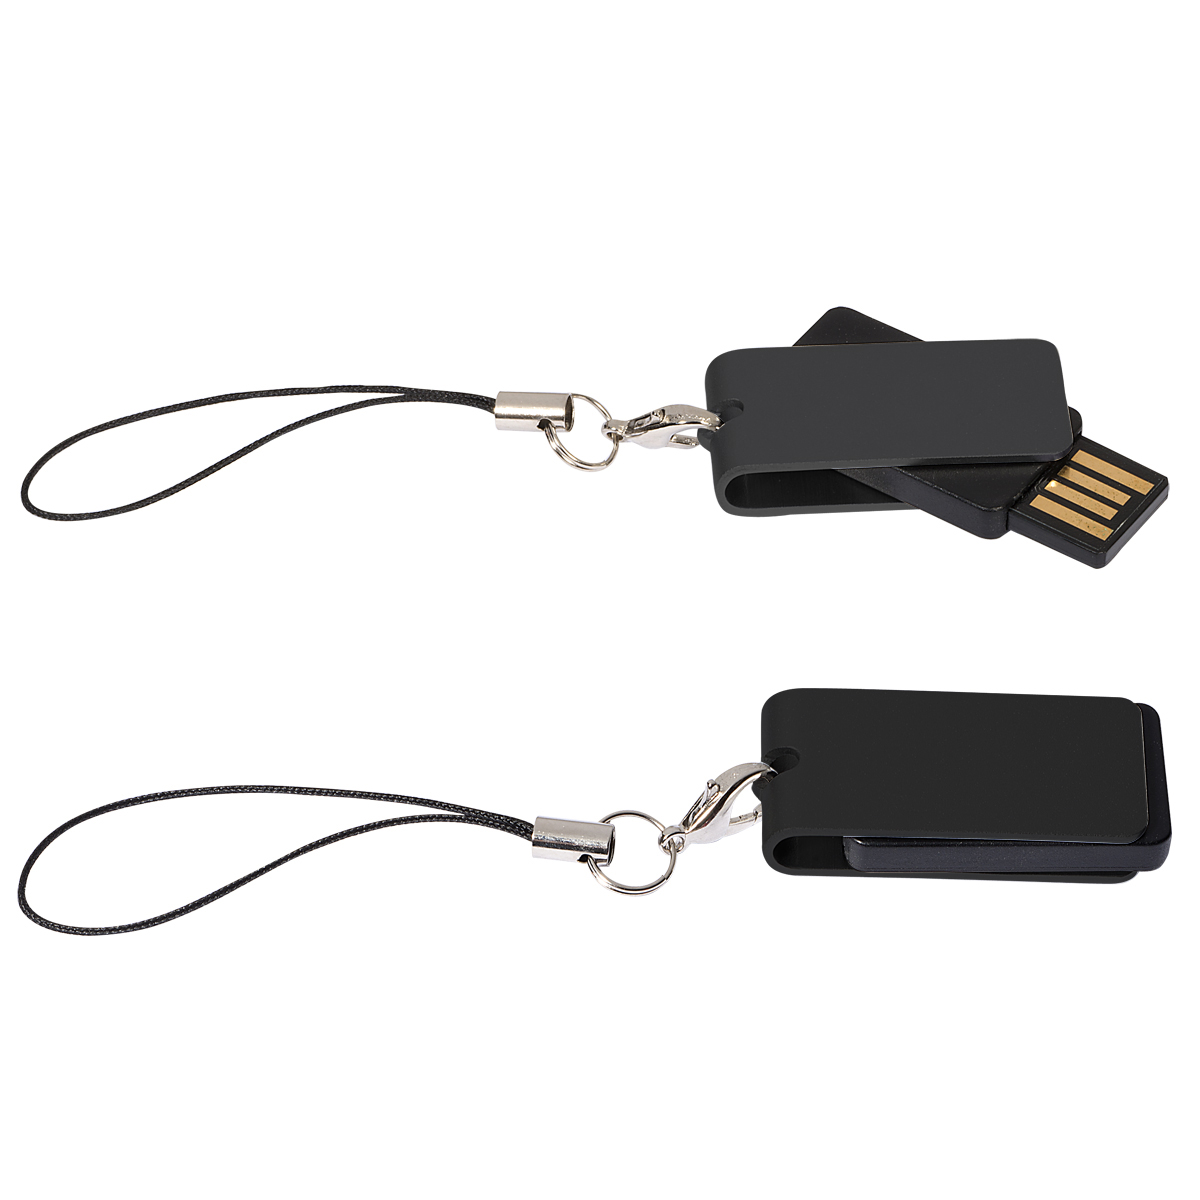 SlimFoldable USB Memory Flash Drive - 8GB